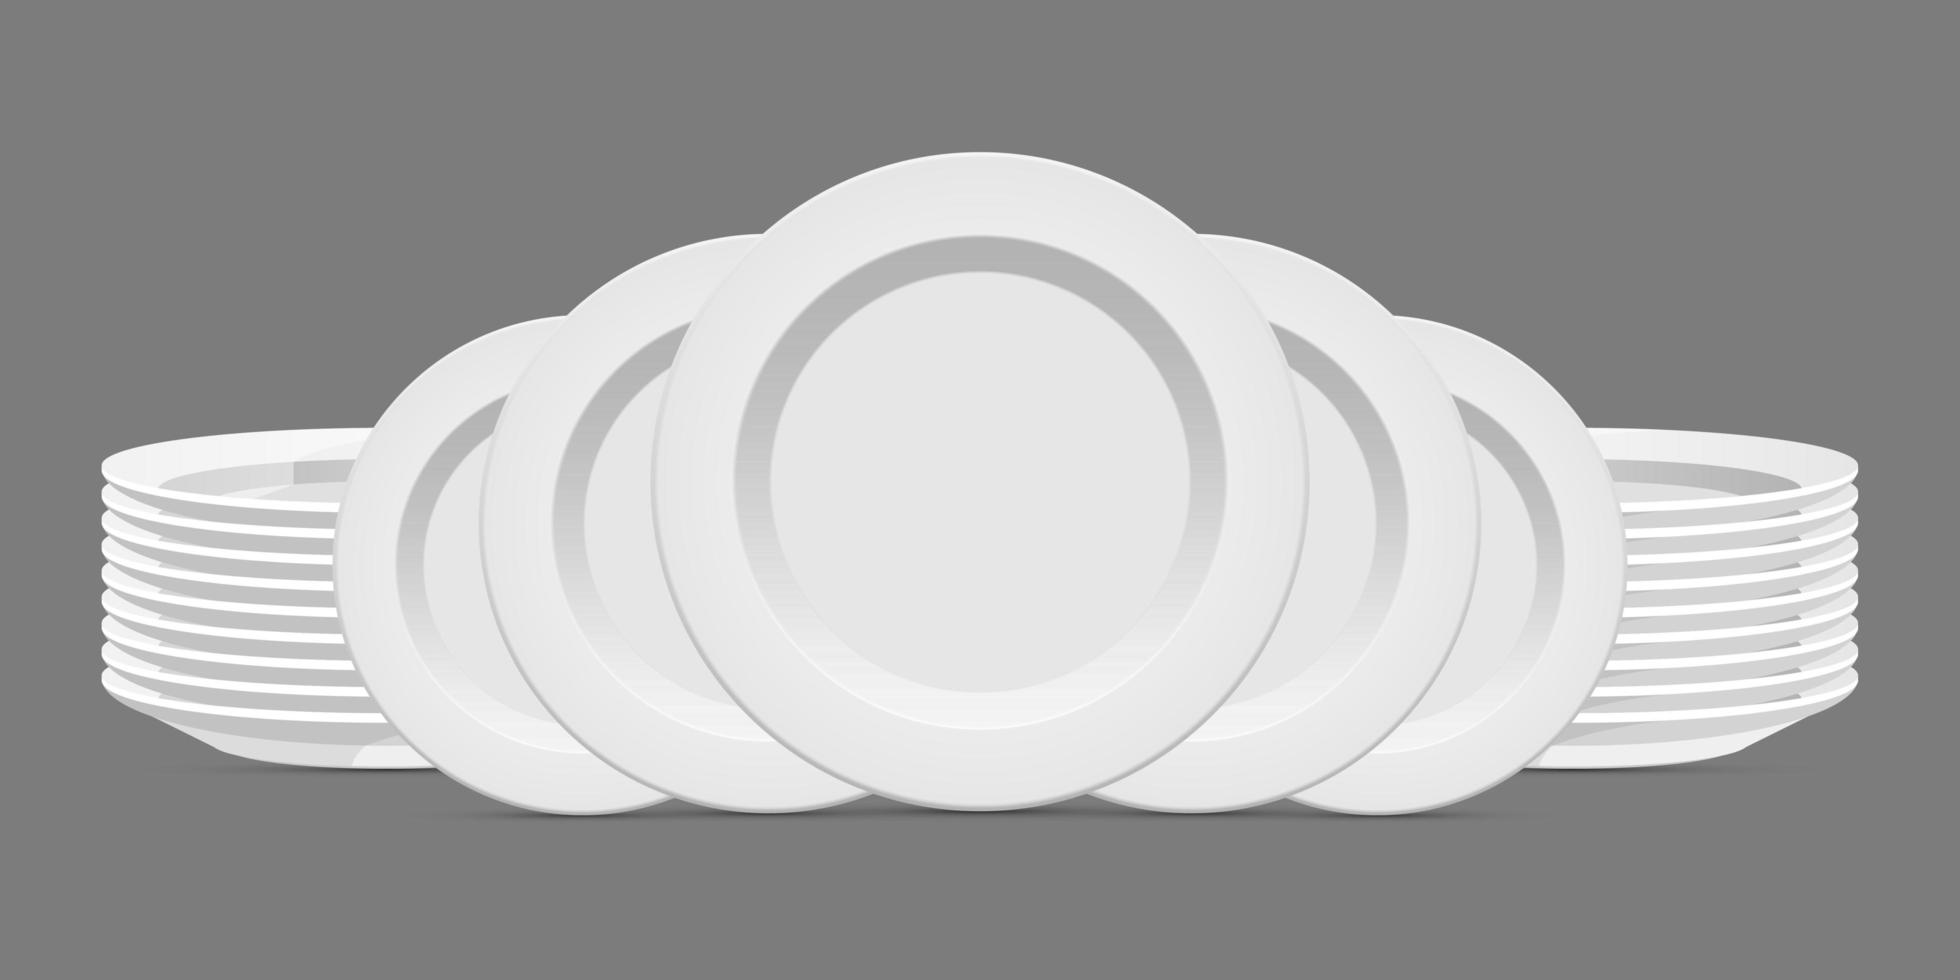 Porcelain plate vector design illustration isolated on background